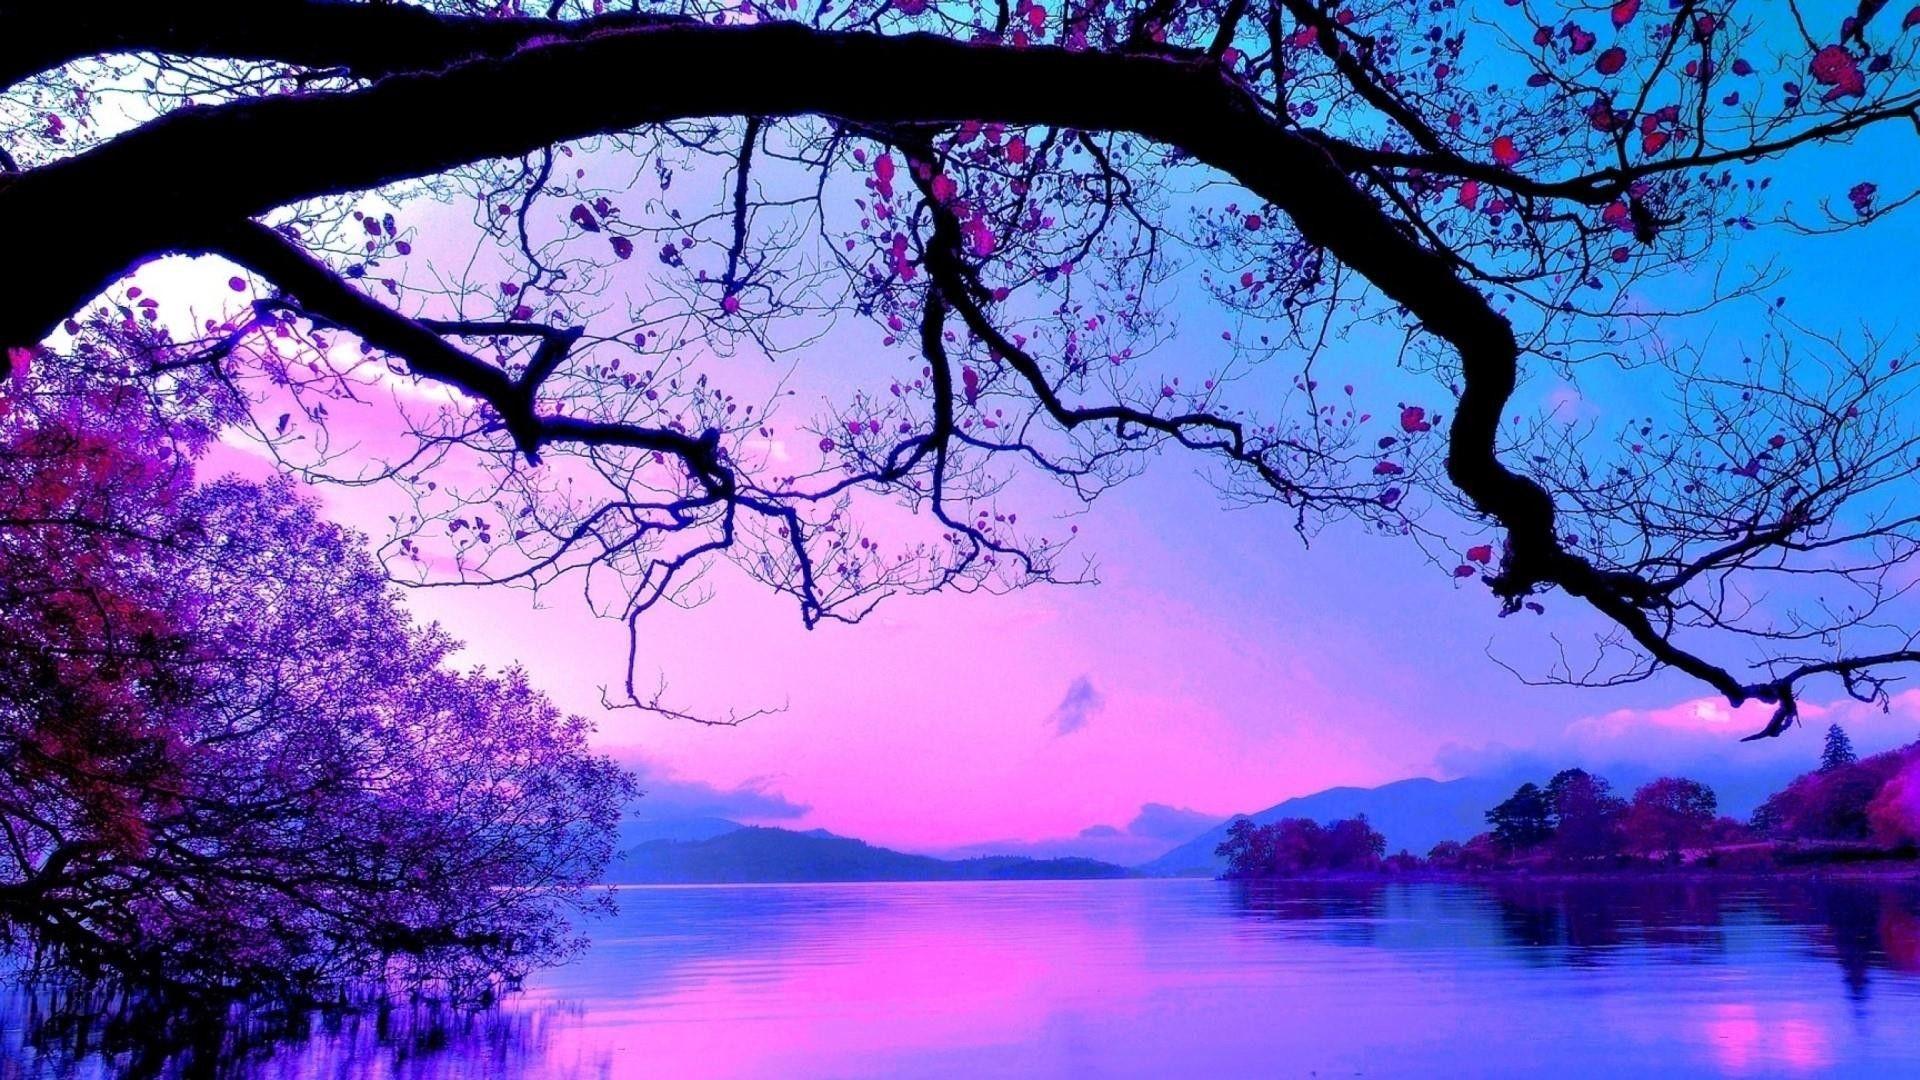 Purple Landscape Wallpapers - Top Free Purple Landscape Backgrounds